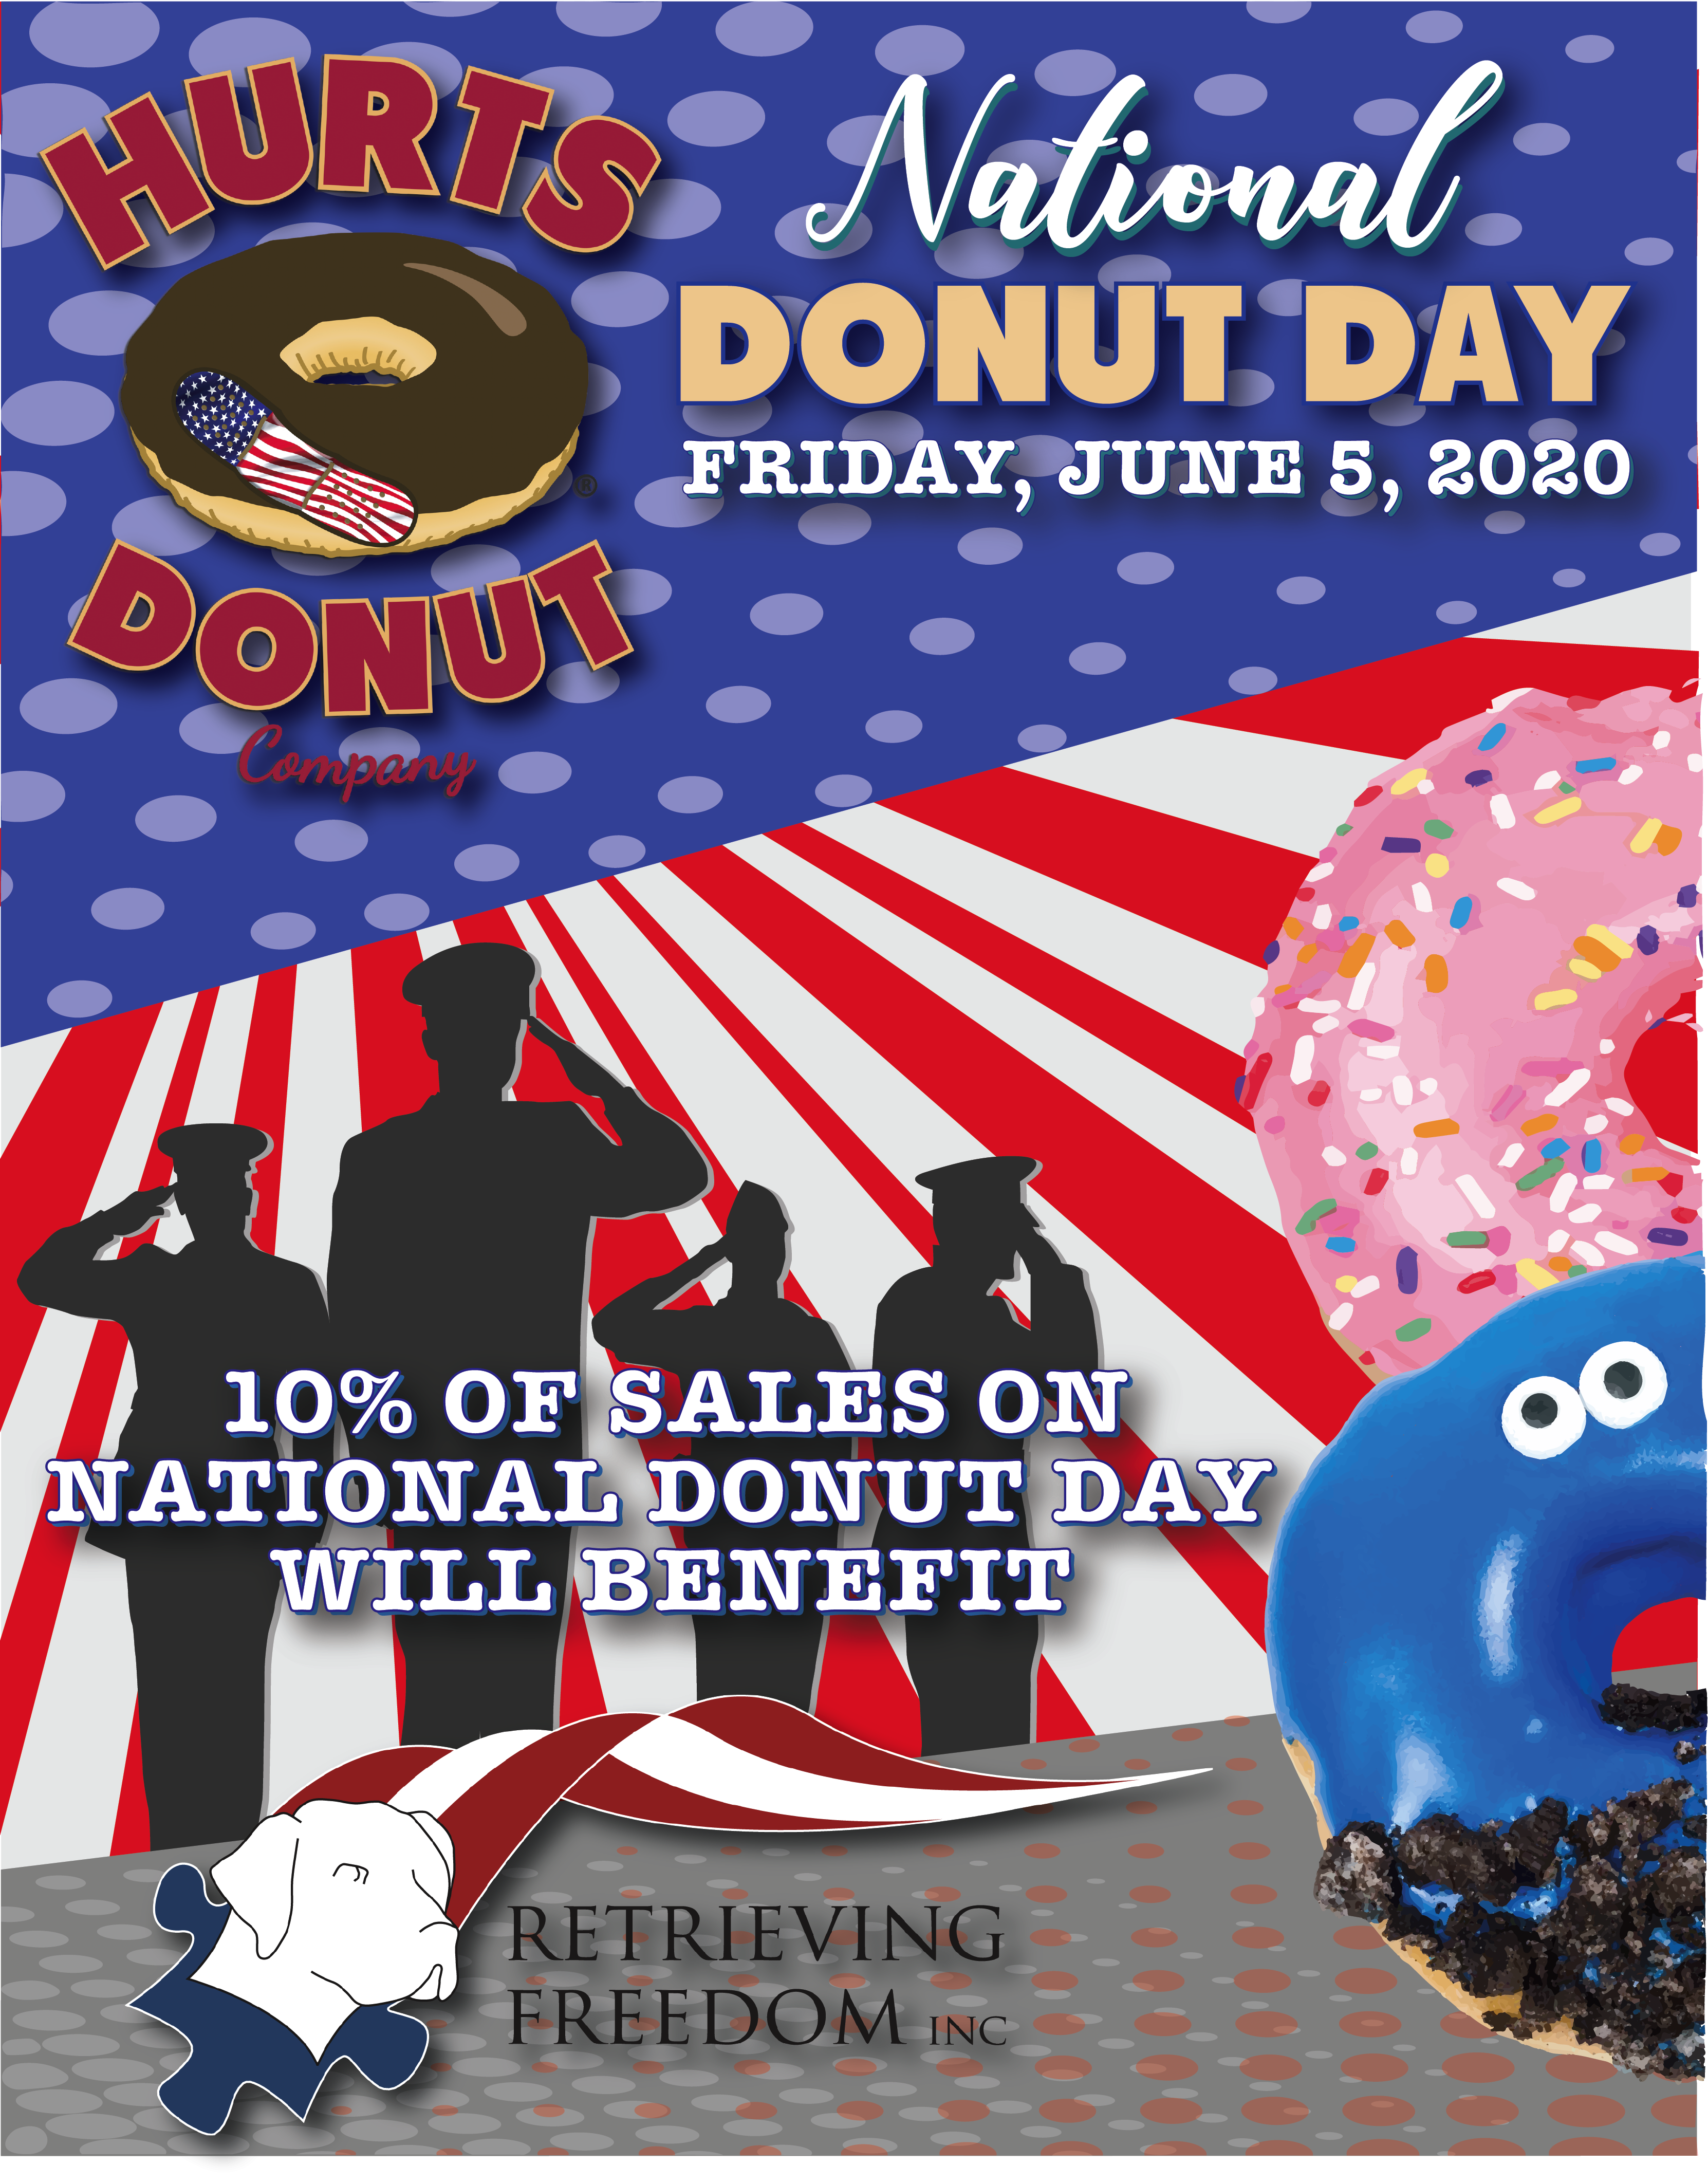 National Donut Day - Hurts Donut Company